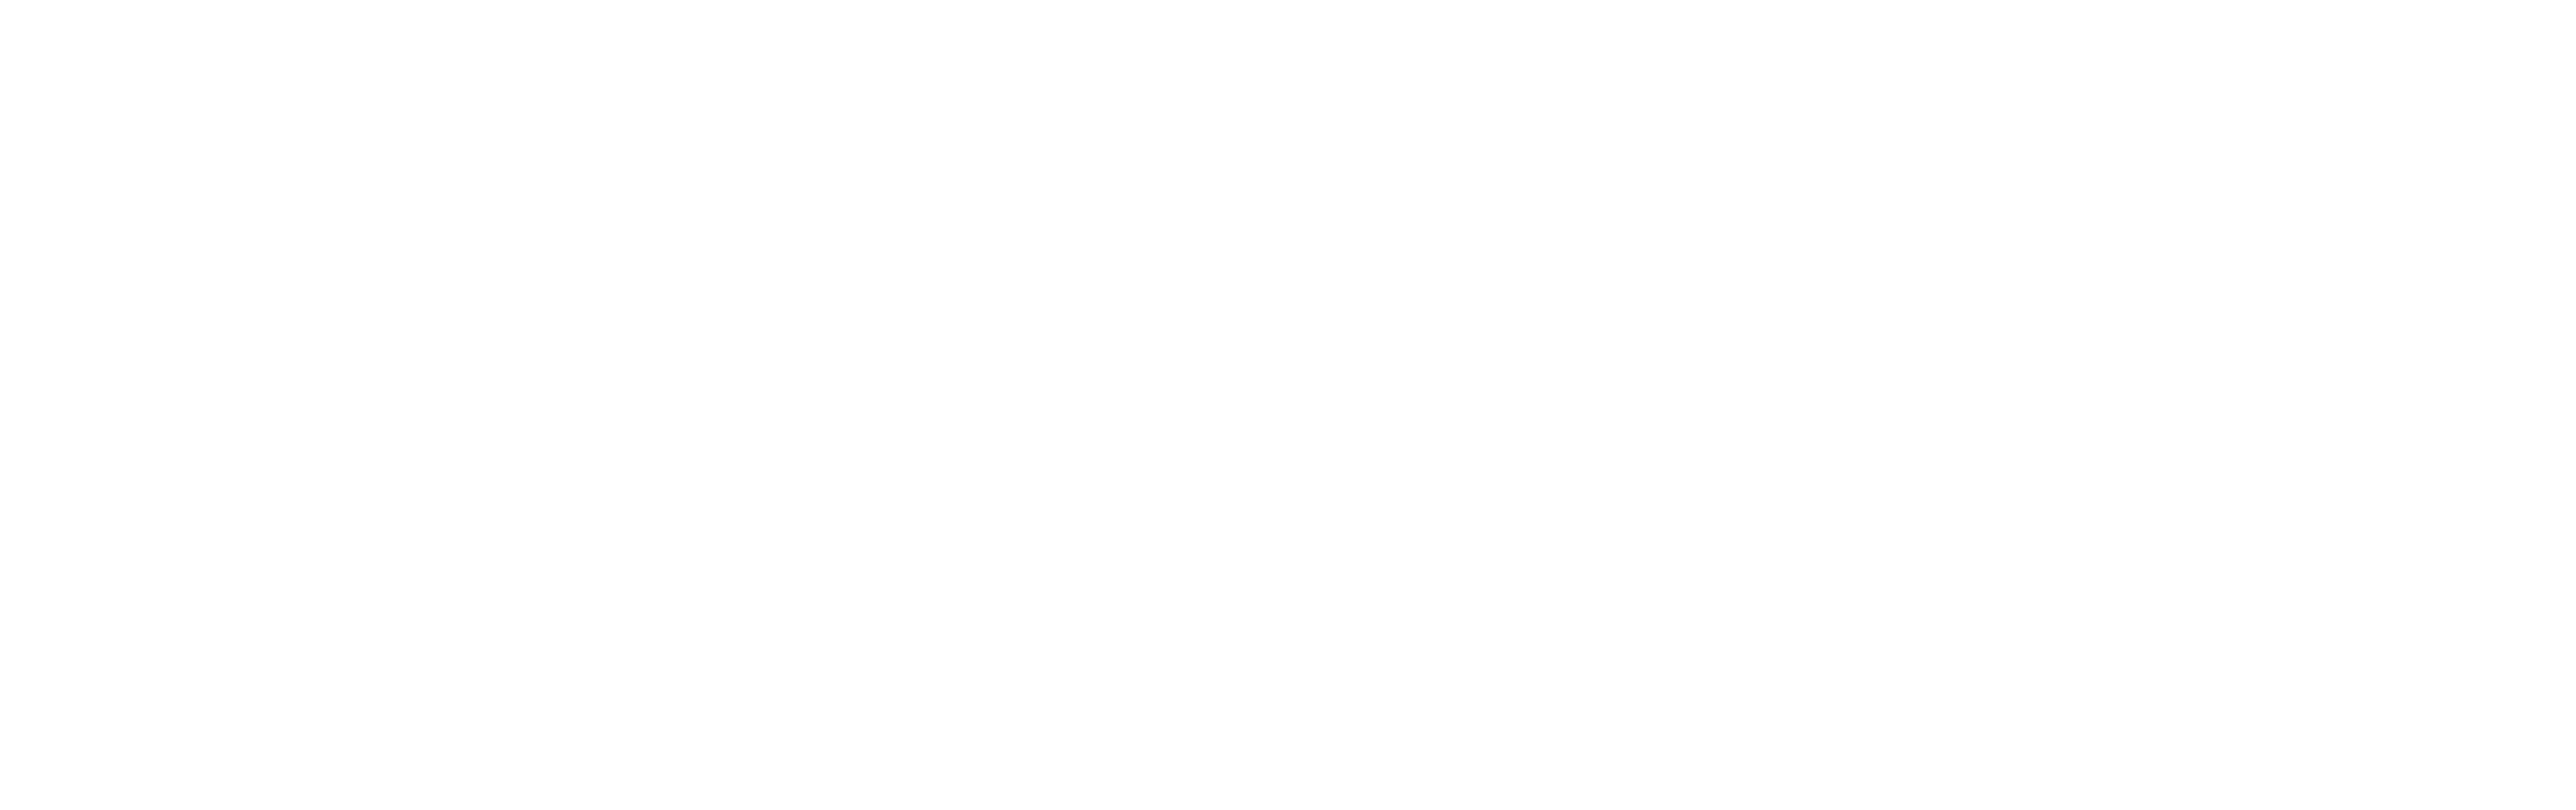 Savior Properties